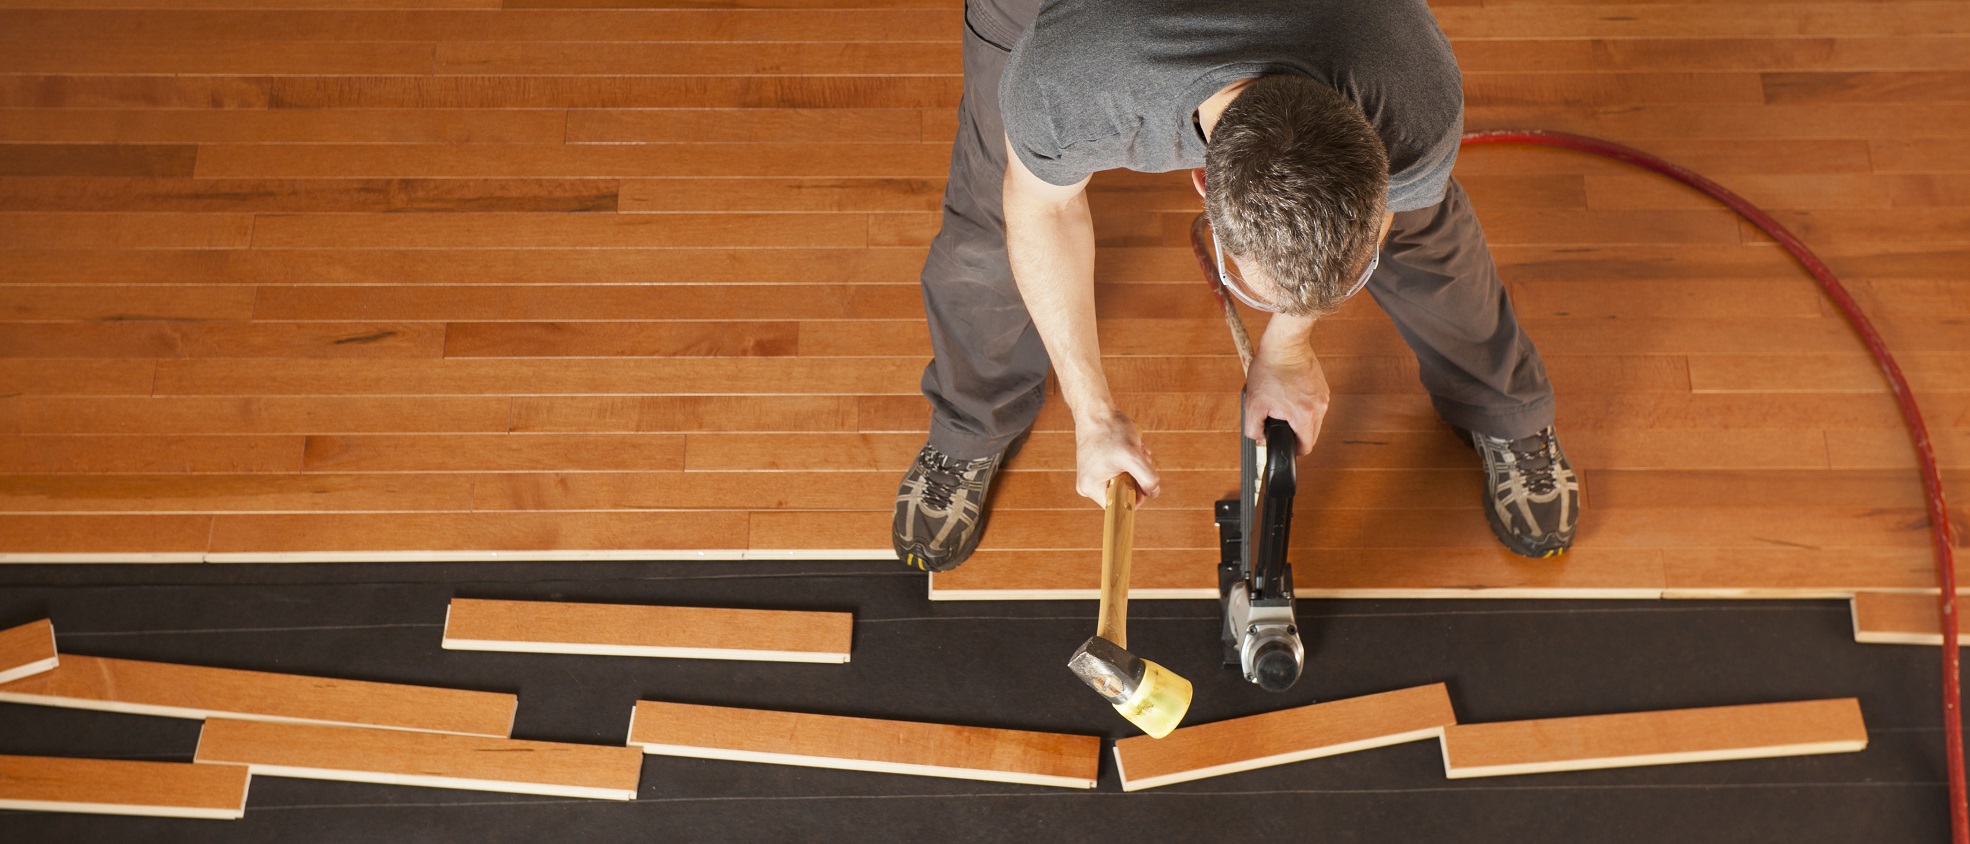 Patrick Daigle Hardwood Flooring, How To Prepare Hardwood Floors For Refinishing